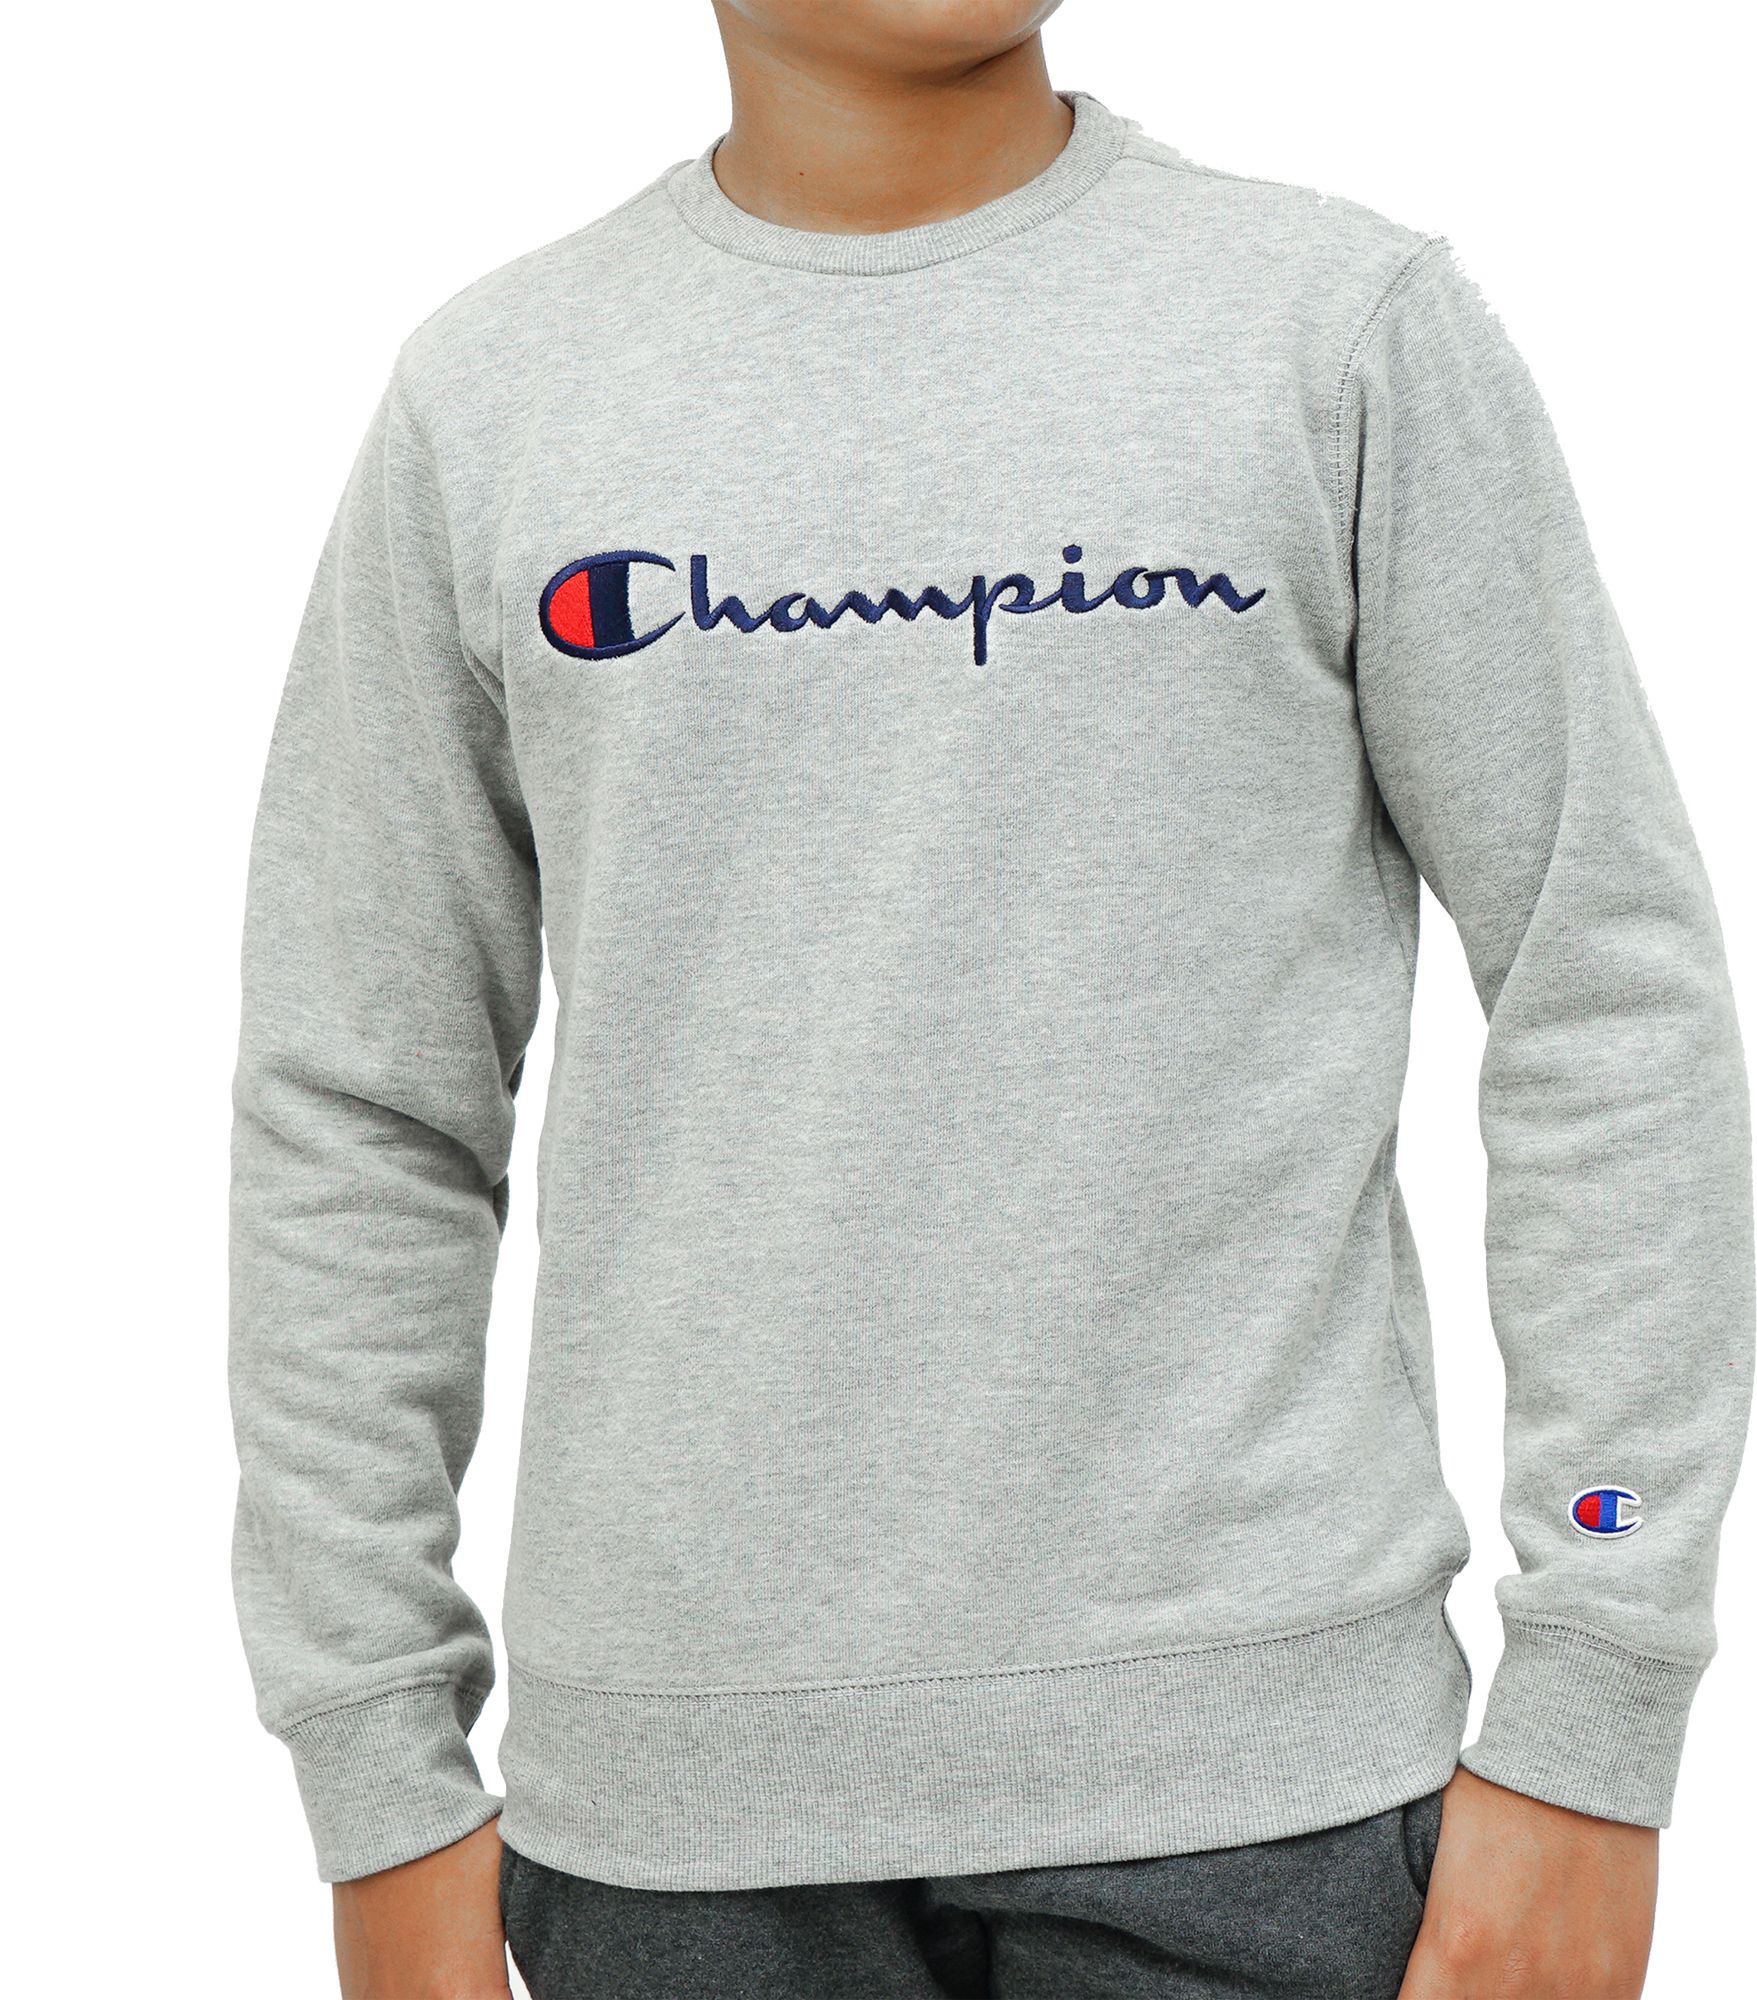 champion hoodie no hood